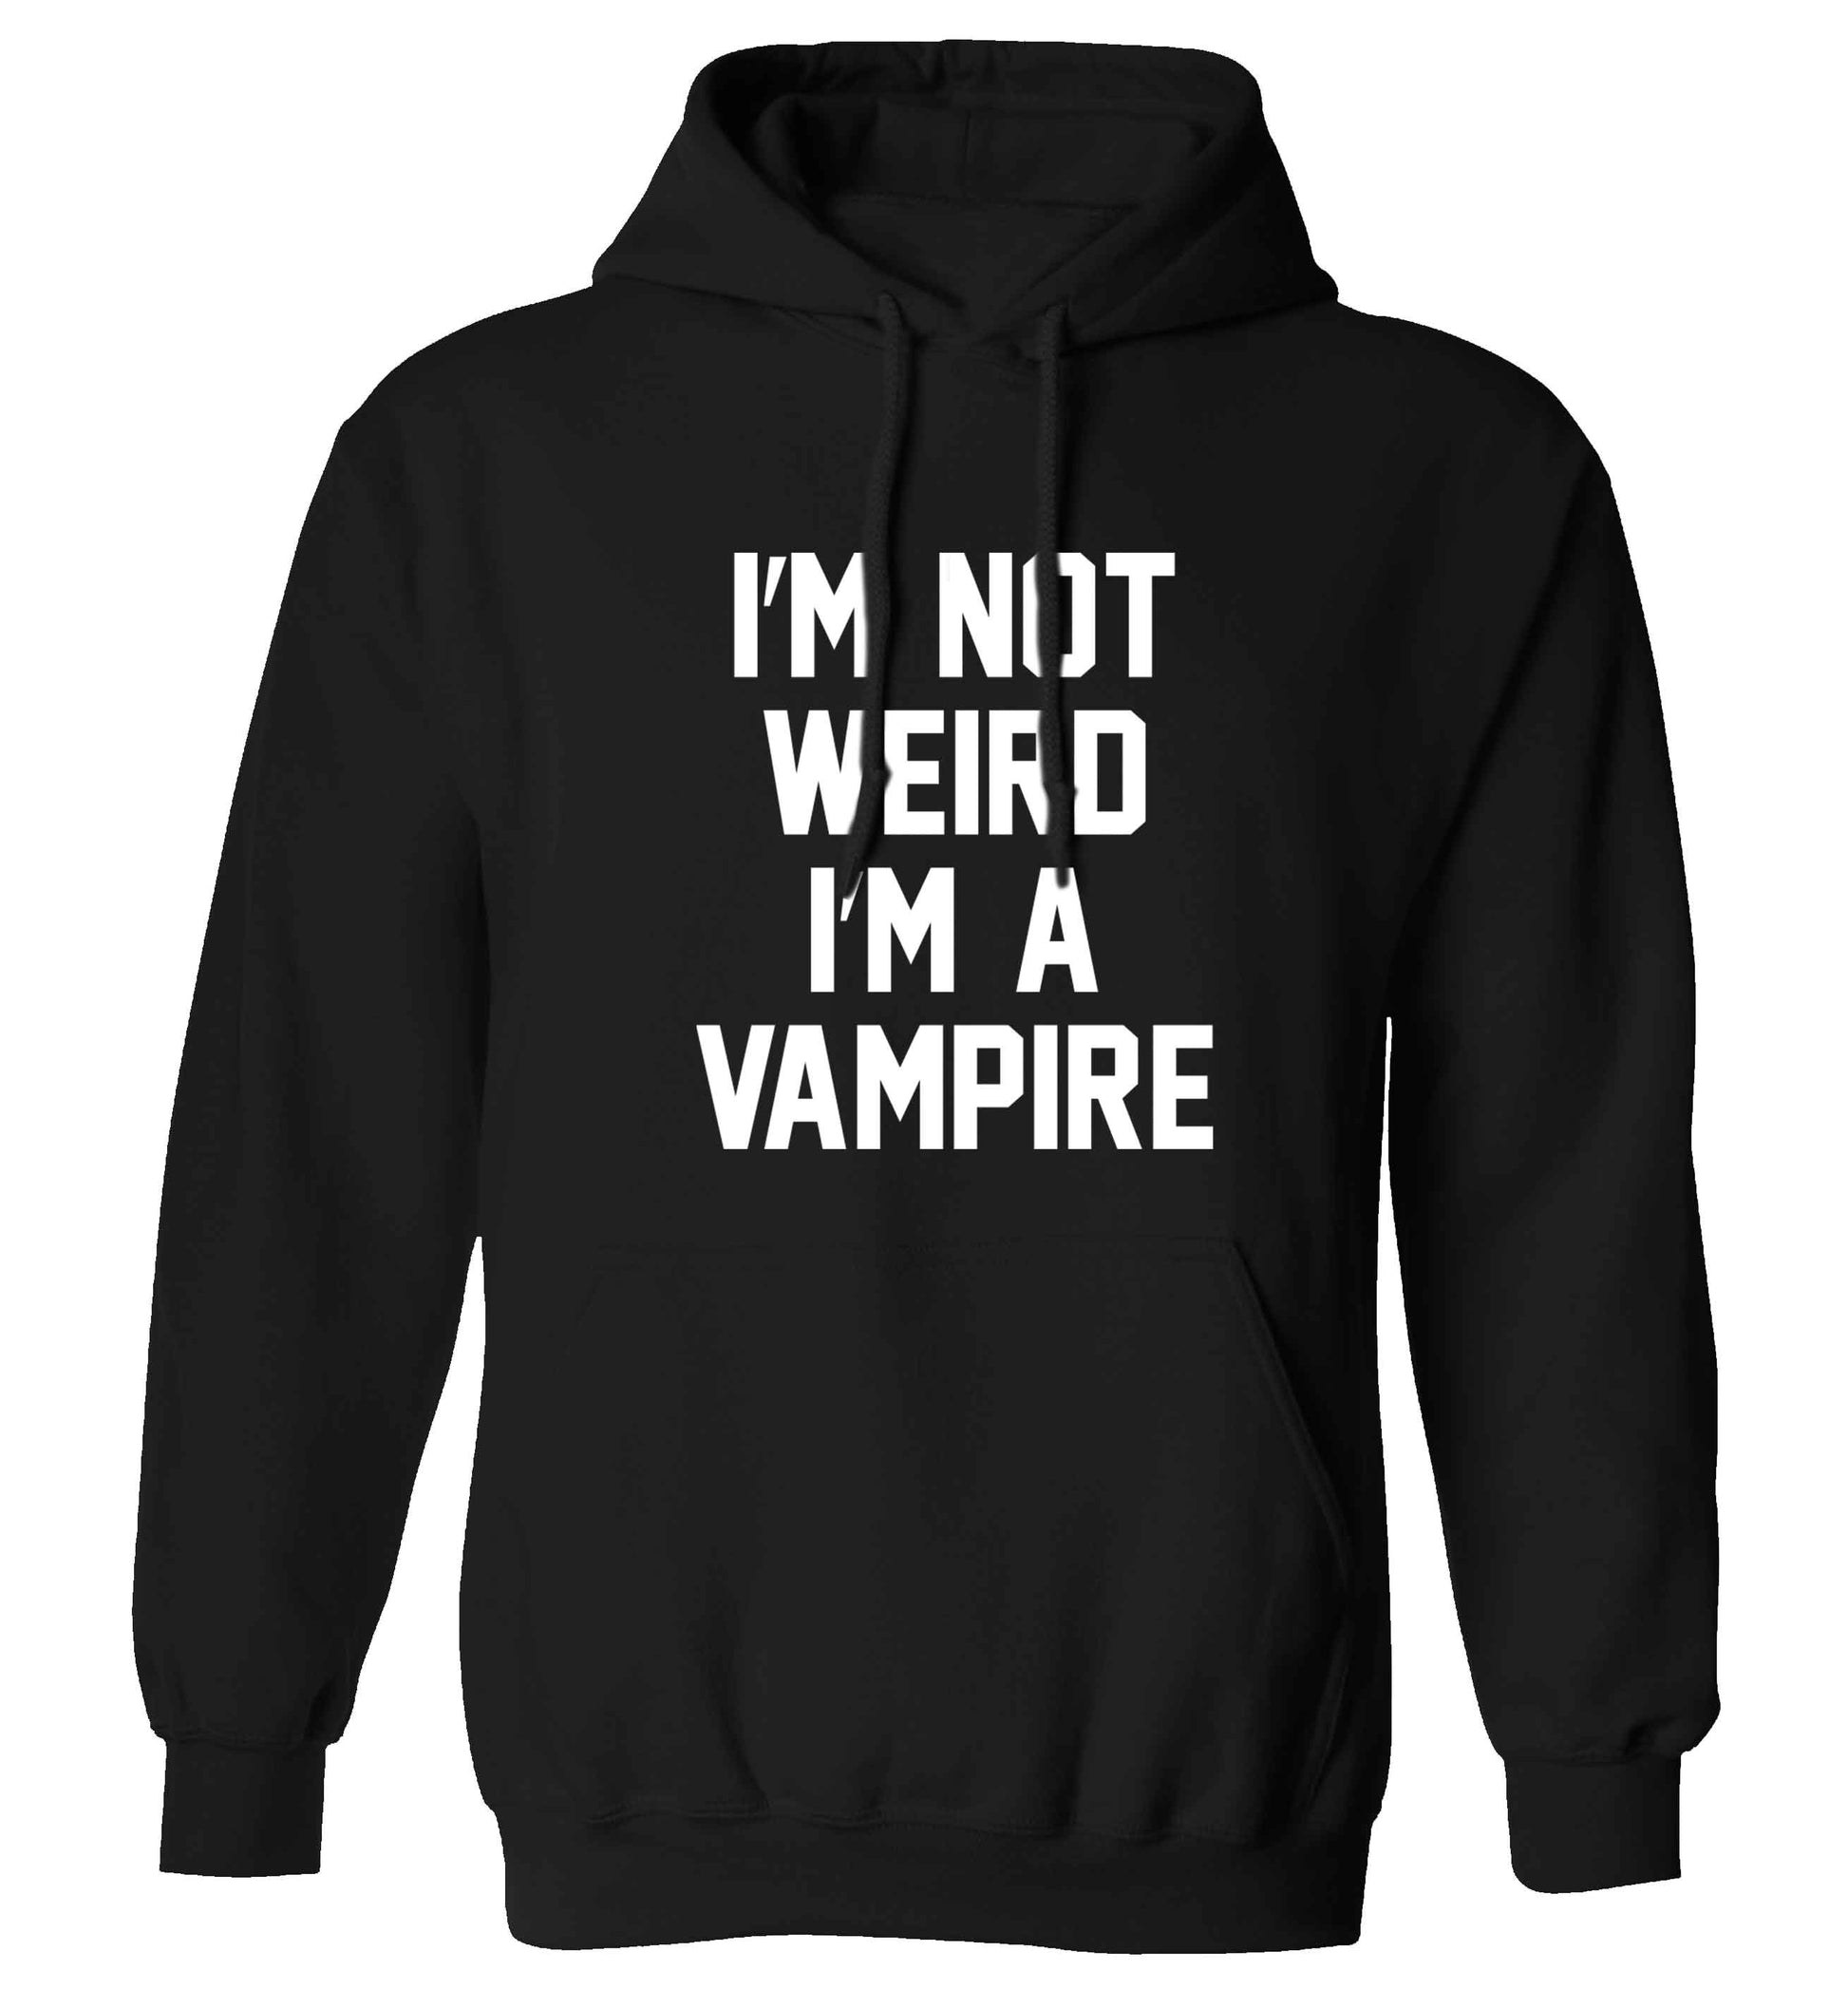 I'm not weird I'm a vampire adults unisex black hoodie 2XL